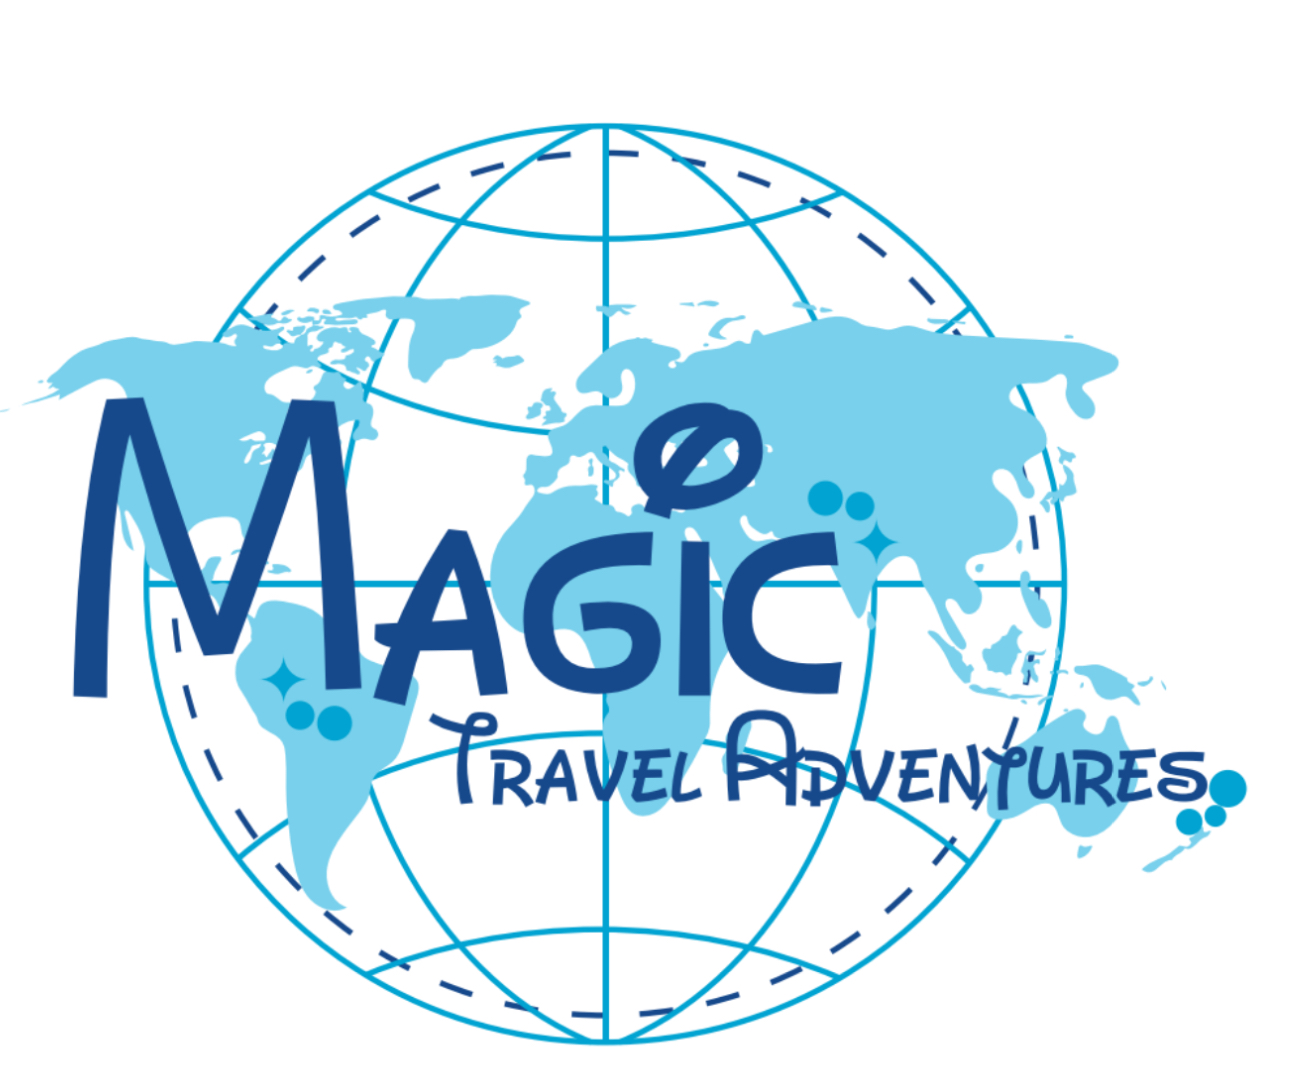 unlocking the magic travel reviews